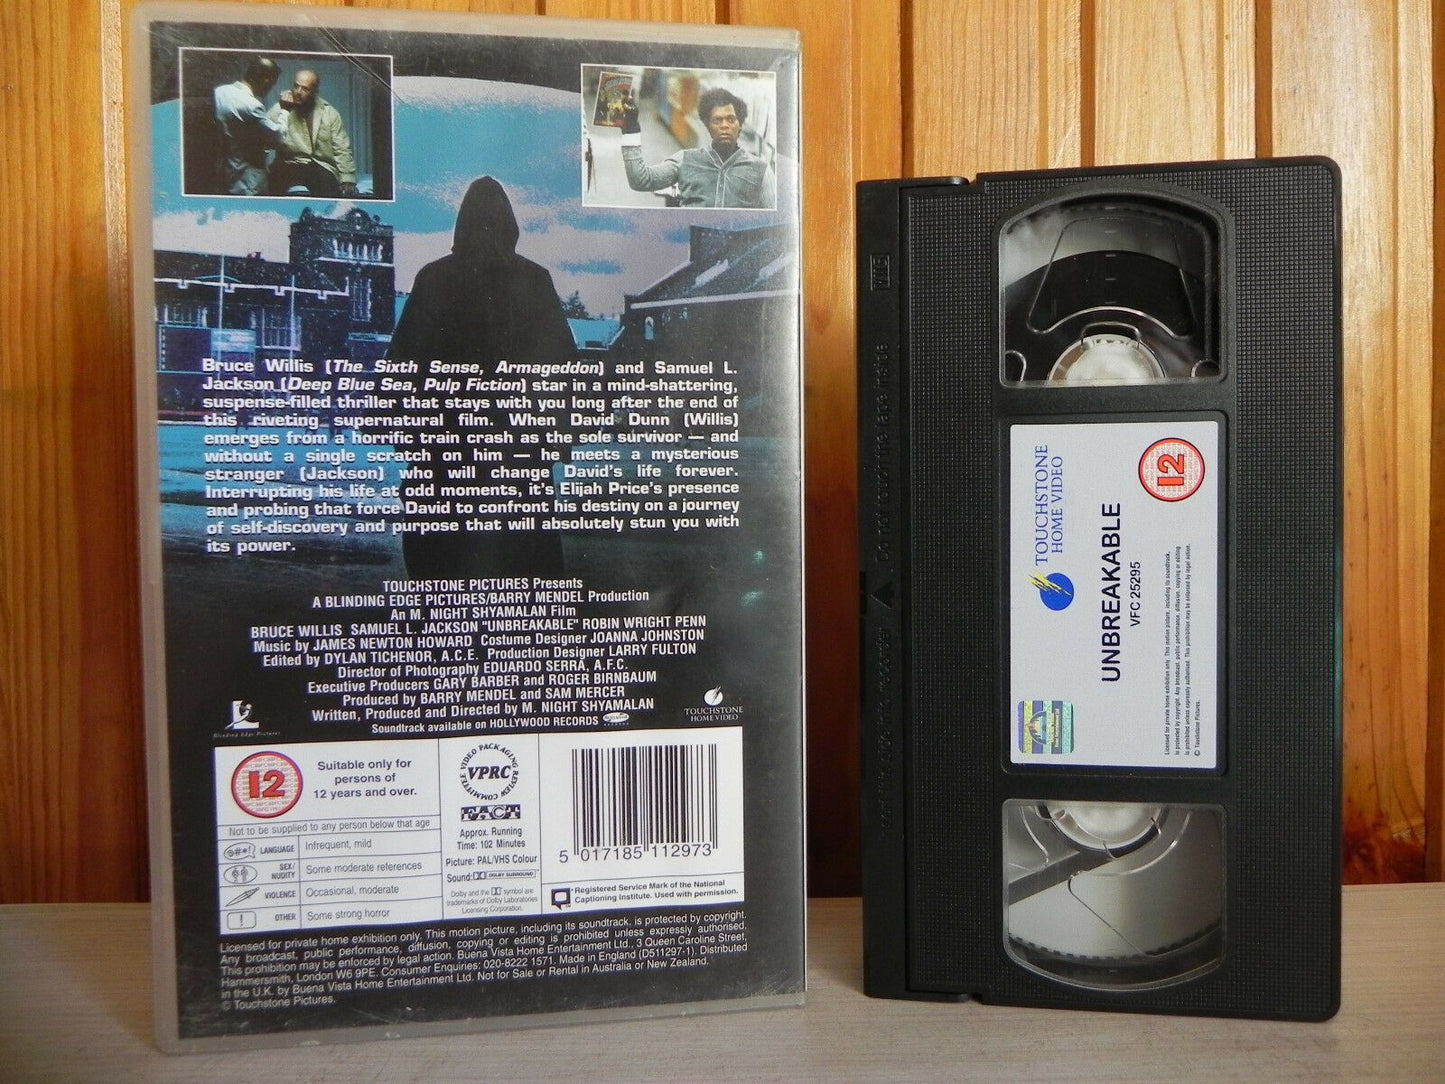 Unbreakable - Large Box - Thriller - Bruce Willis VS Samuel L.Jackson - Pal VHS-